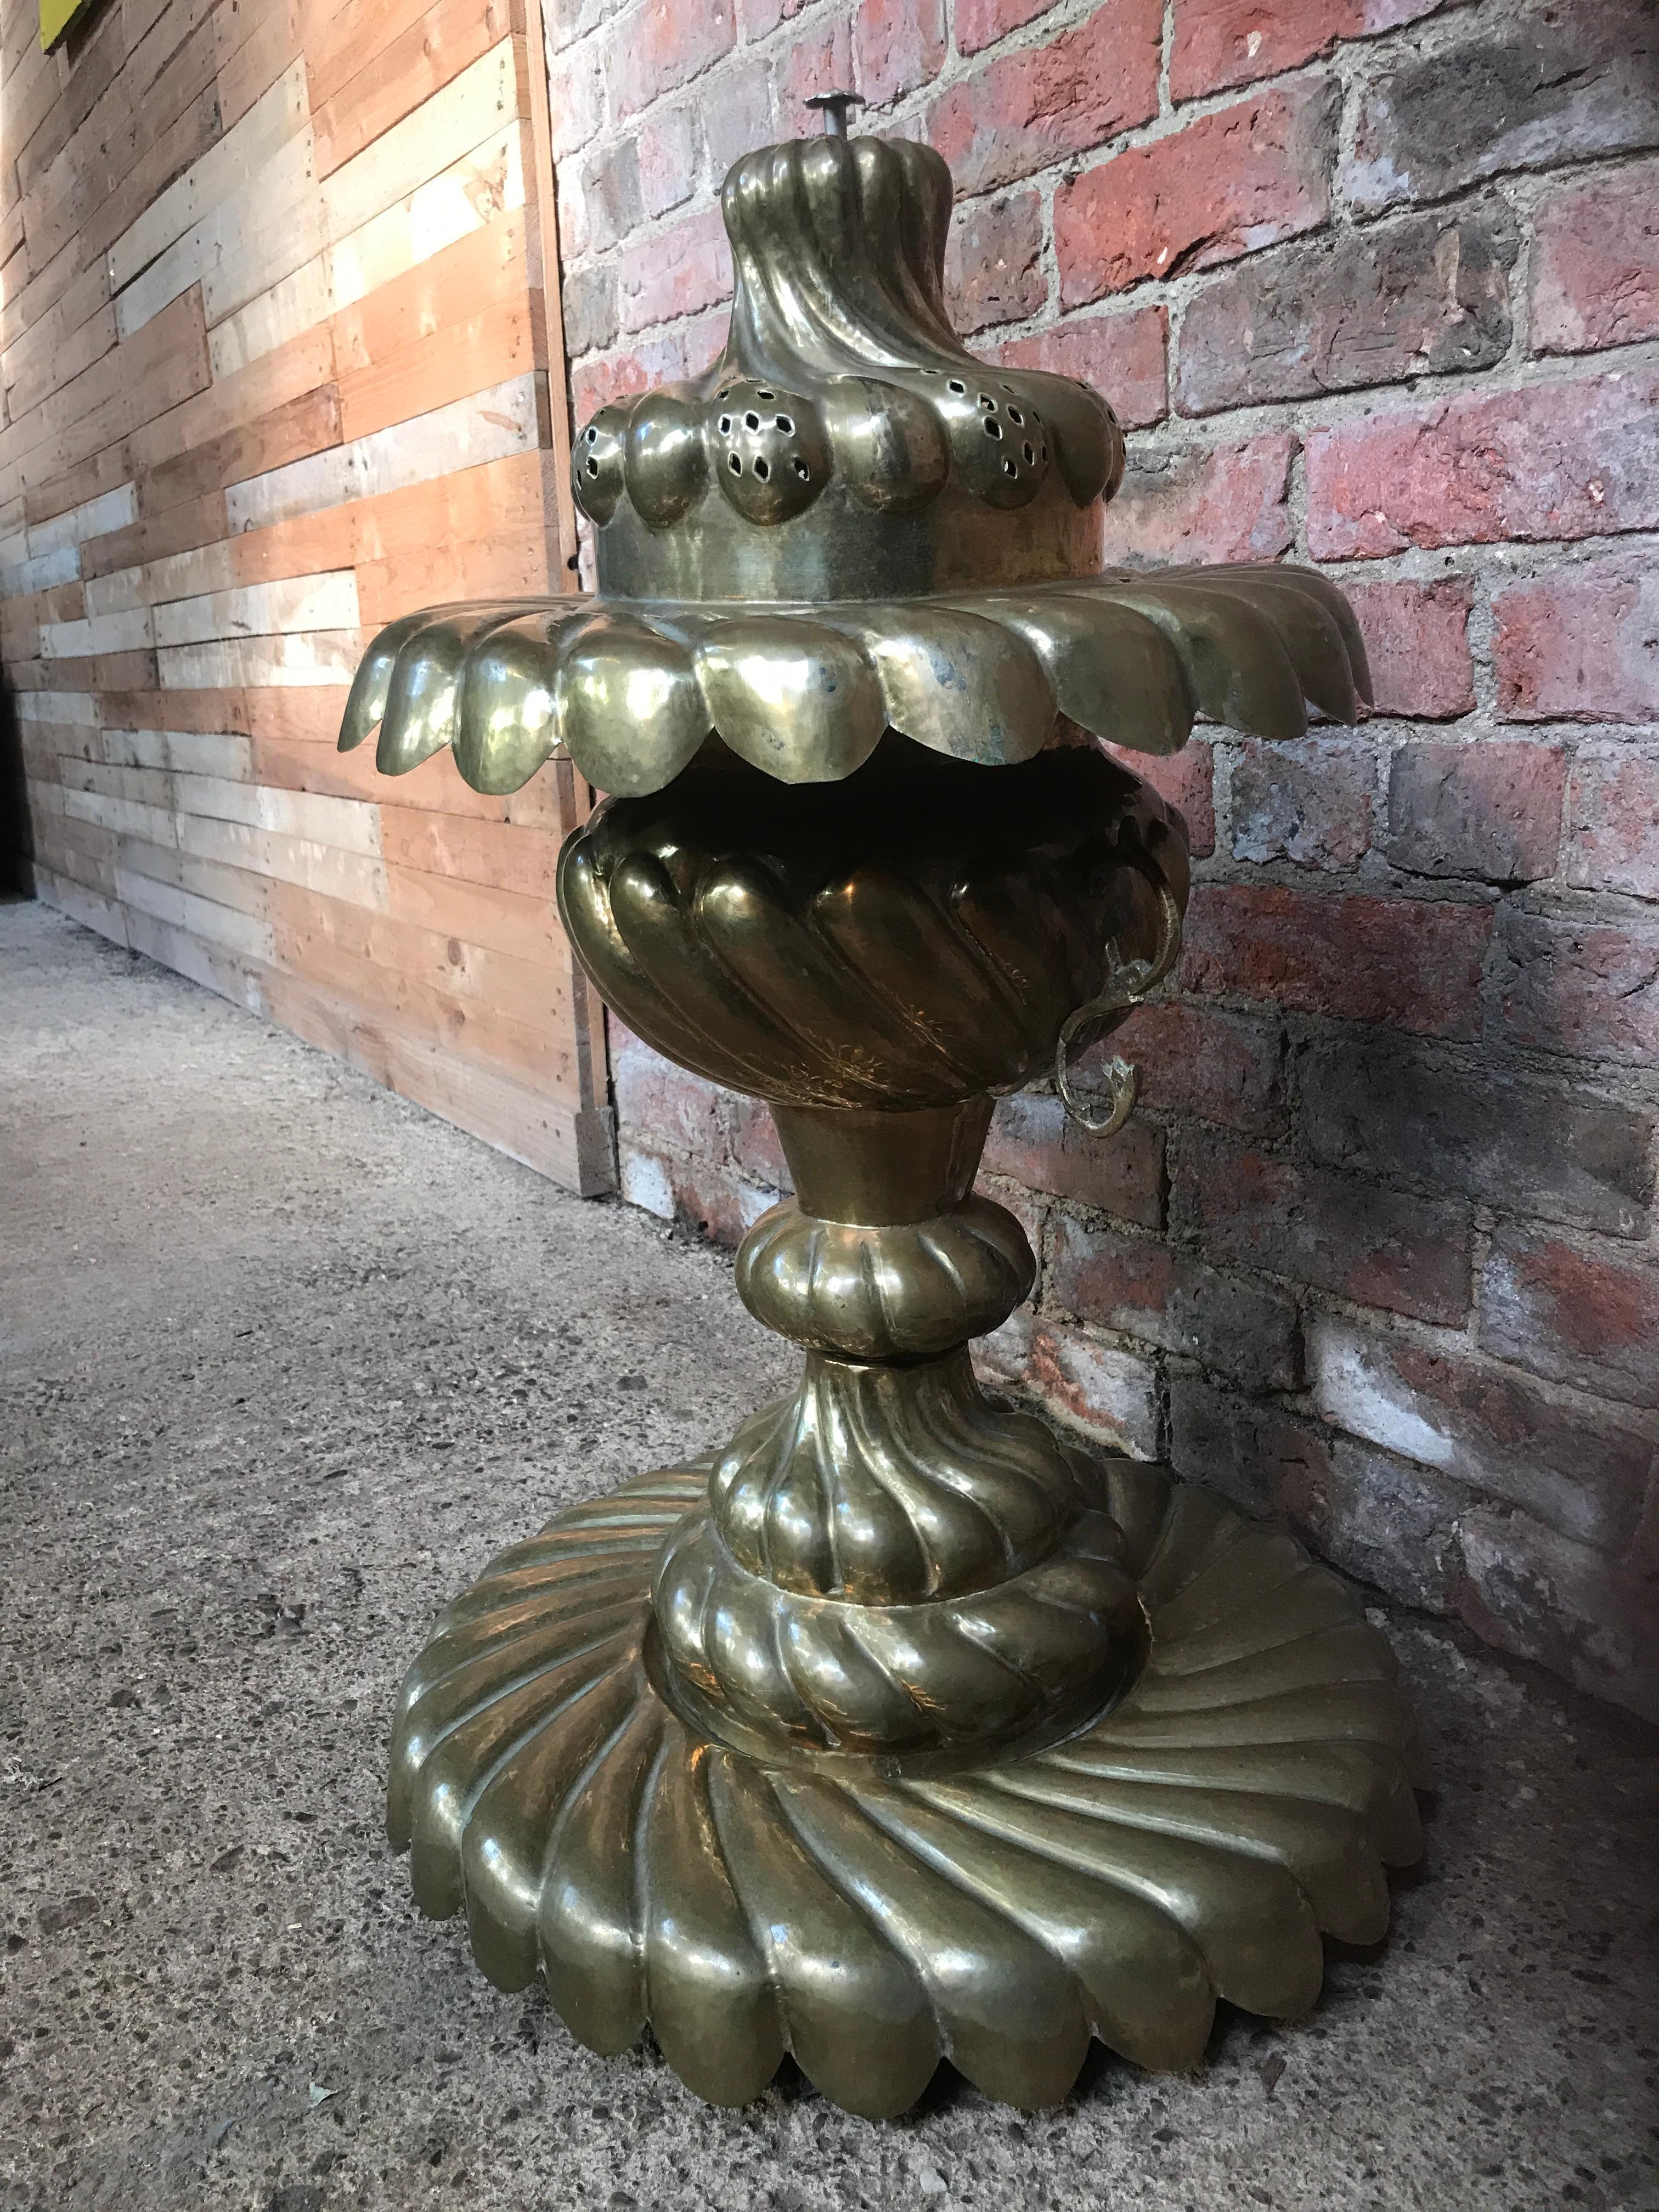 Rare antique handcrafted sculptural decorative copper / brass urn

Measures: Height 80cm, diameter 53cm.